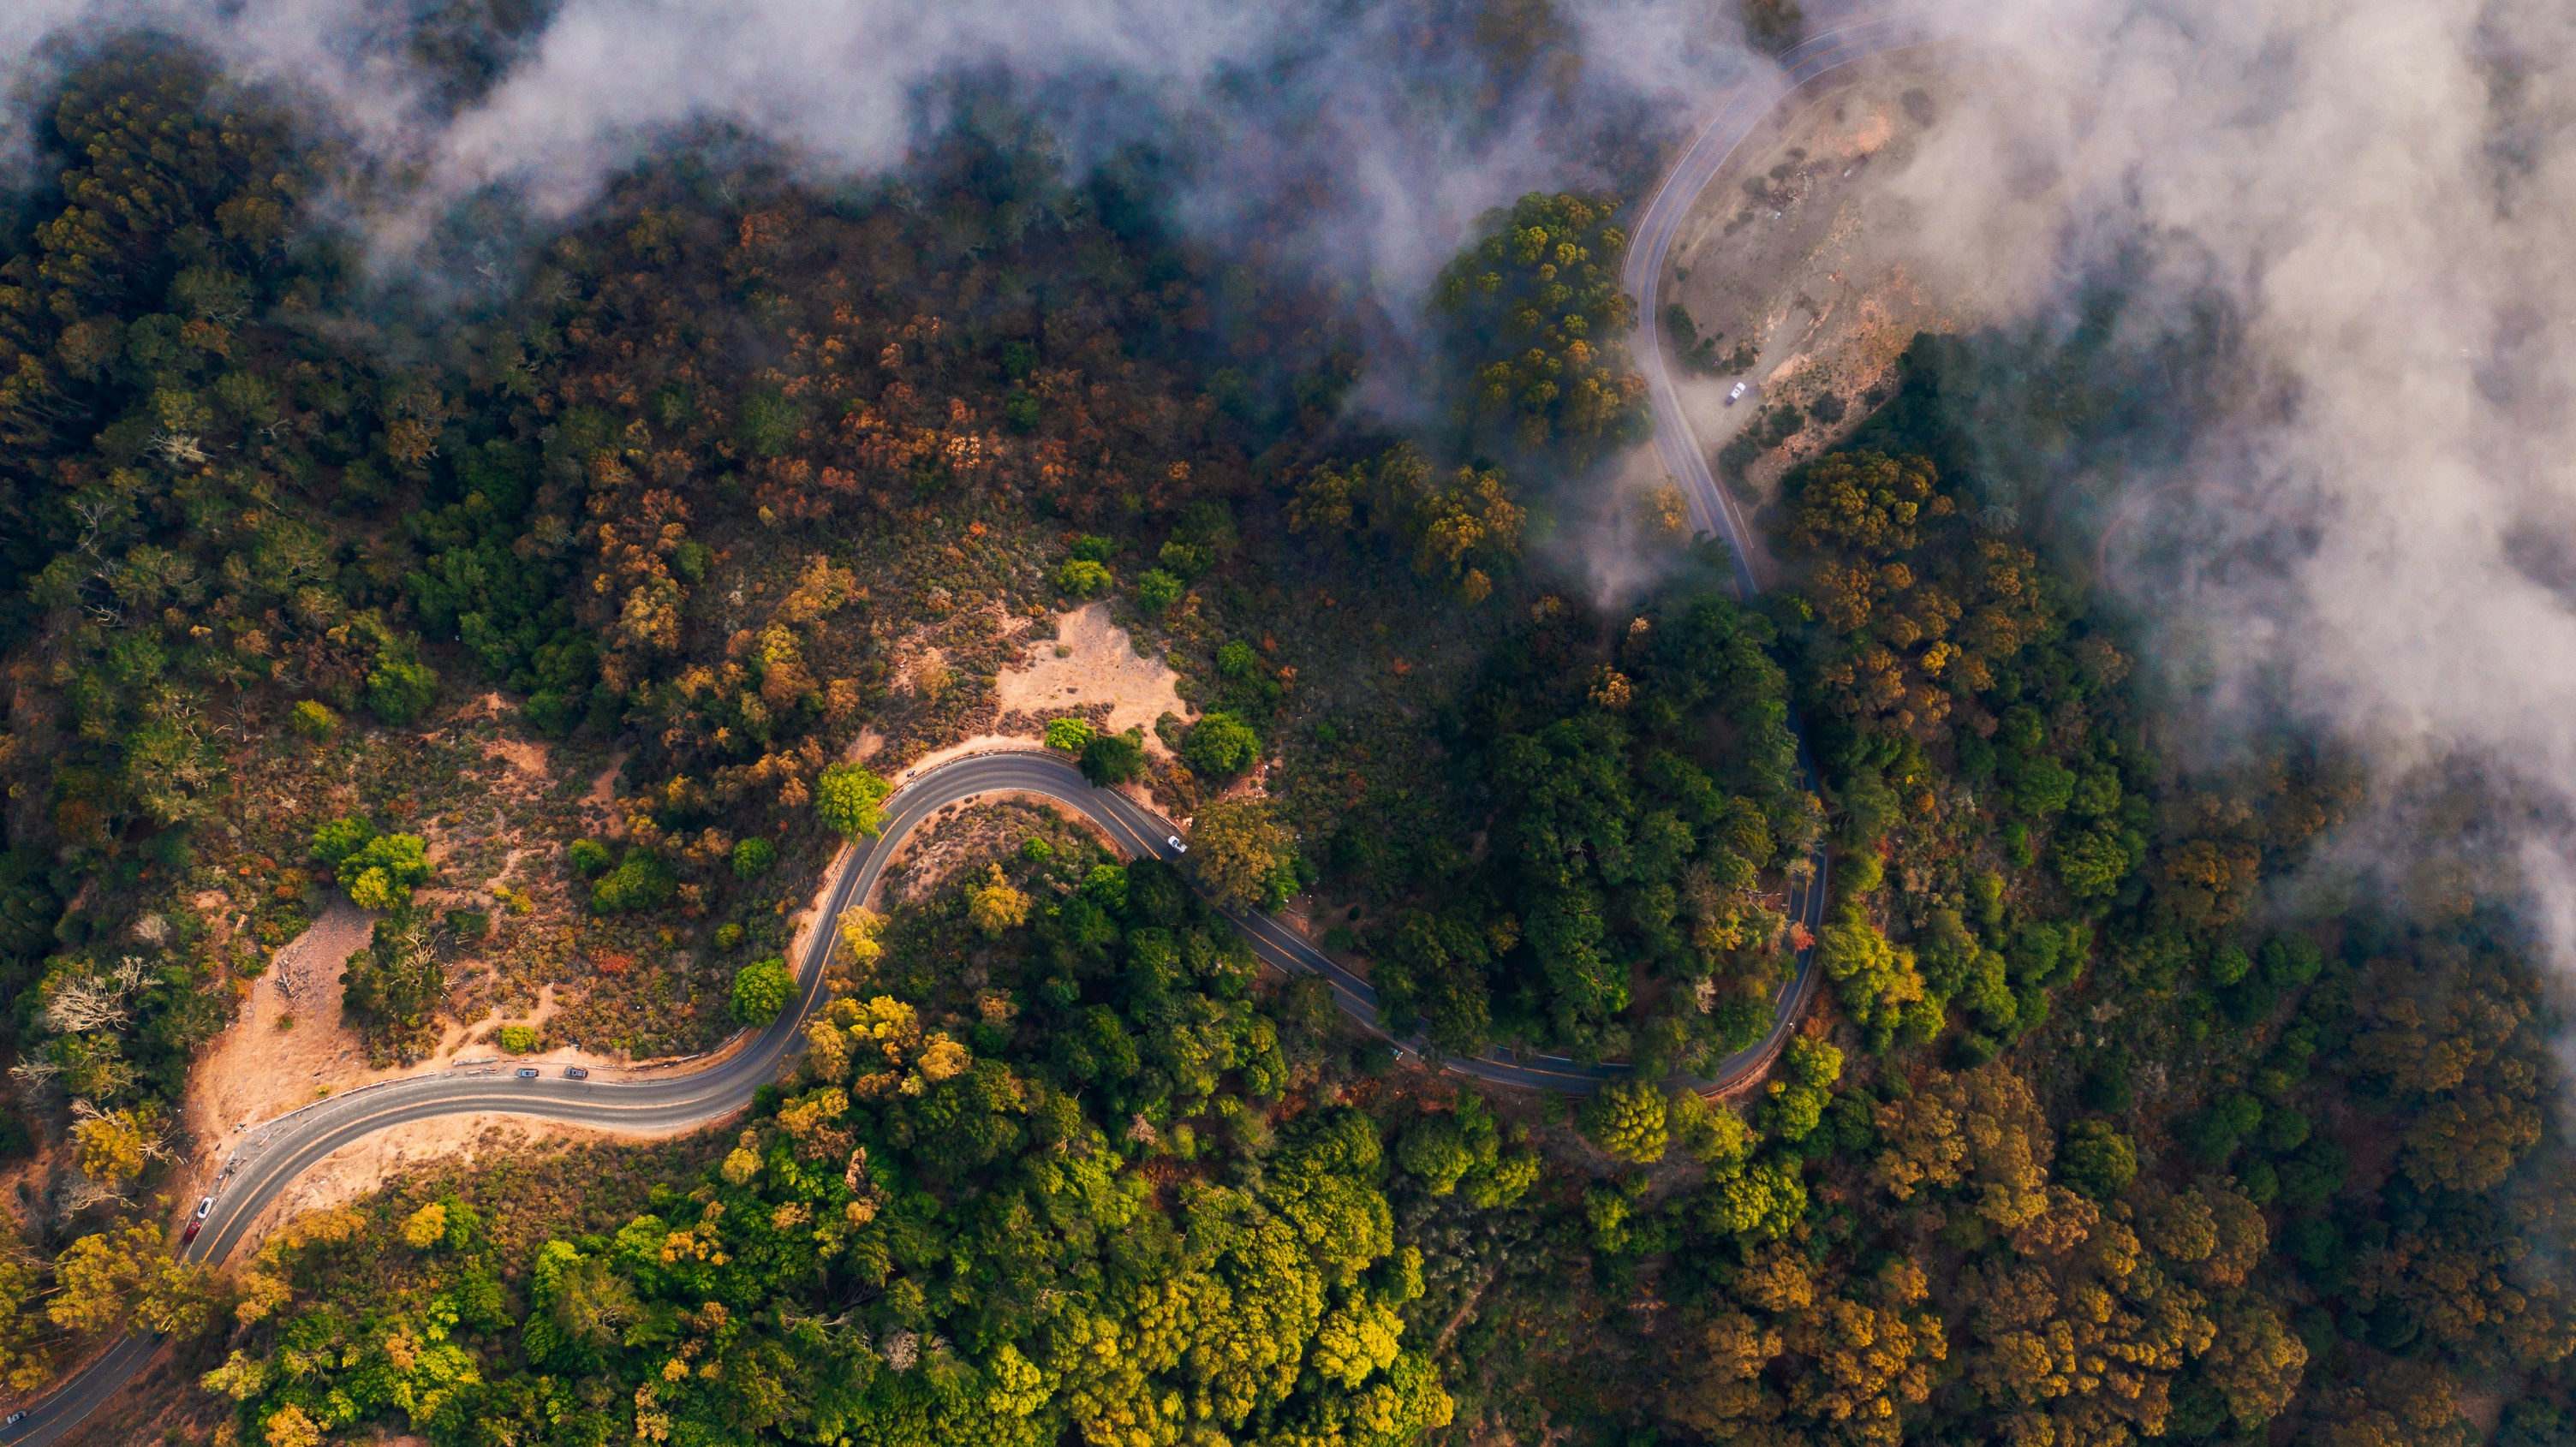 General 3008x1690 nature trees forest plants road asphalt car hairpin turns mist drone photo aerial view fog California USA Meriç Dağlı